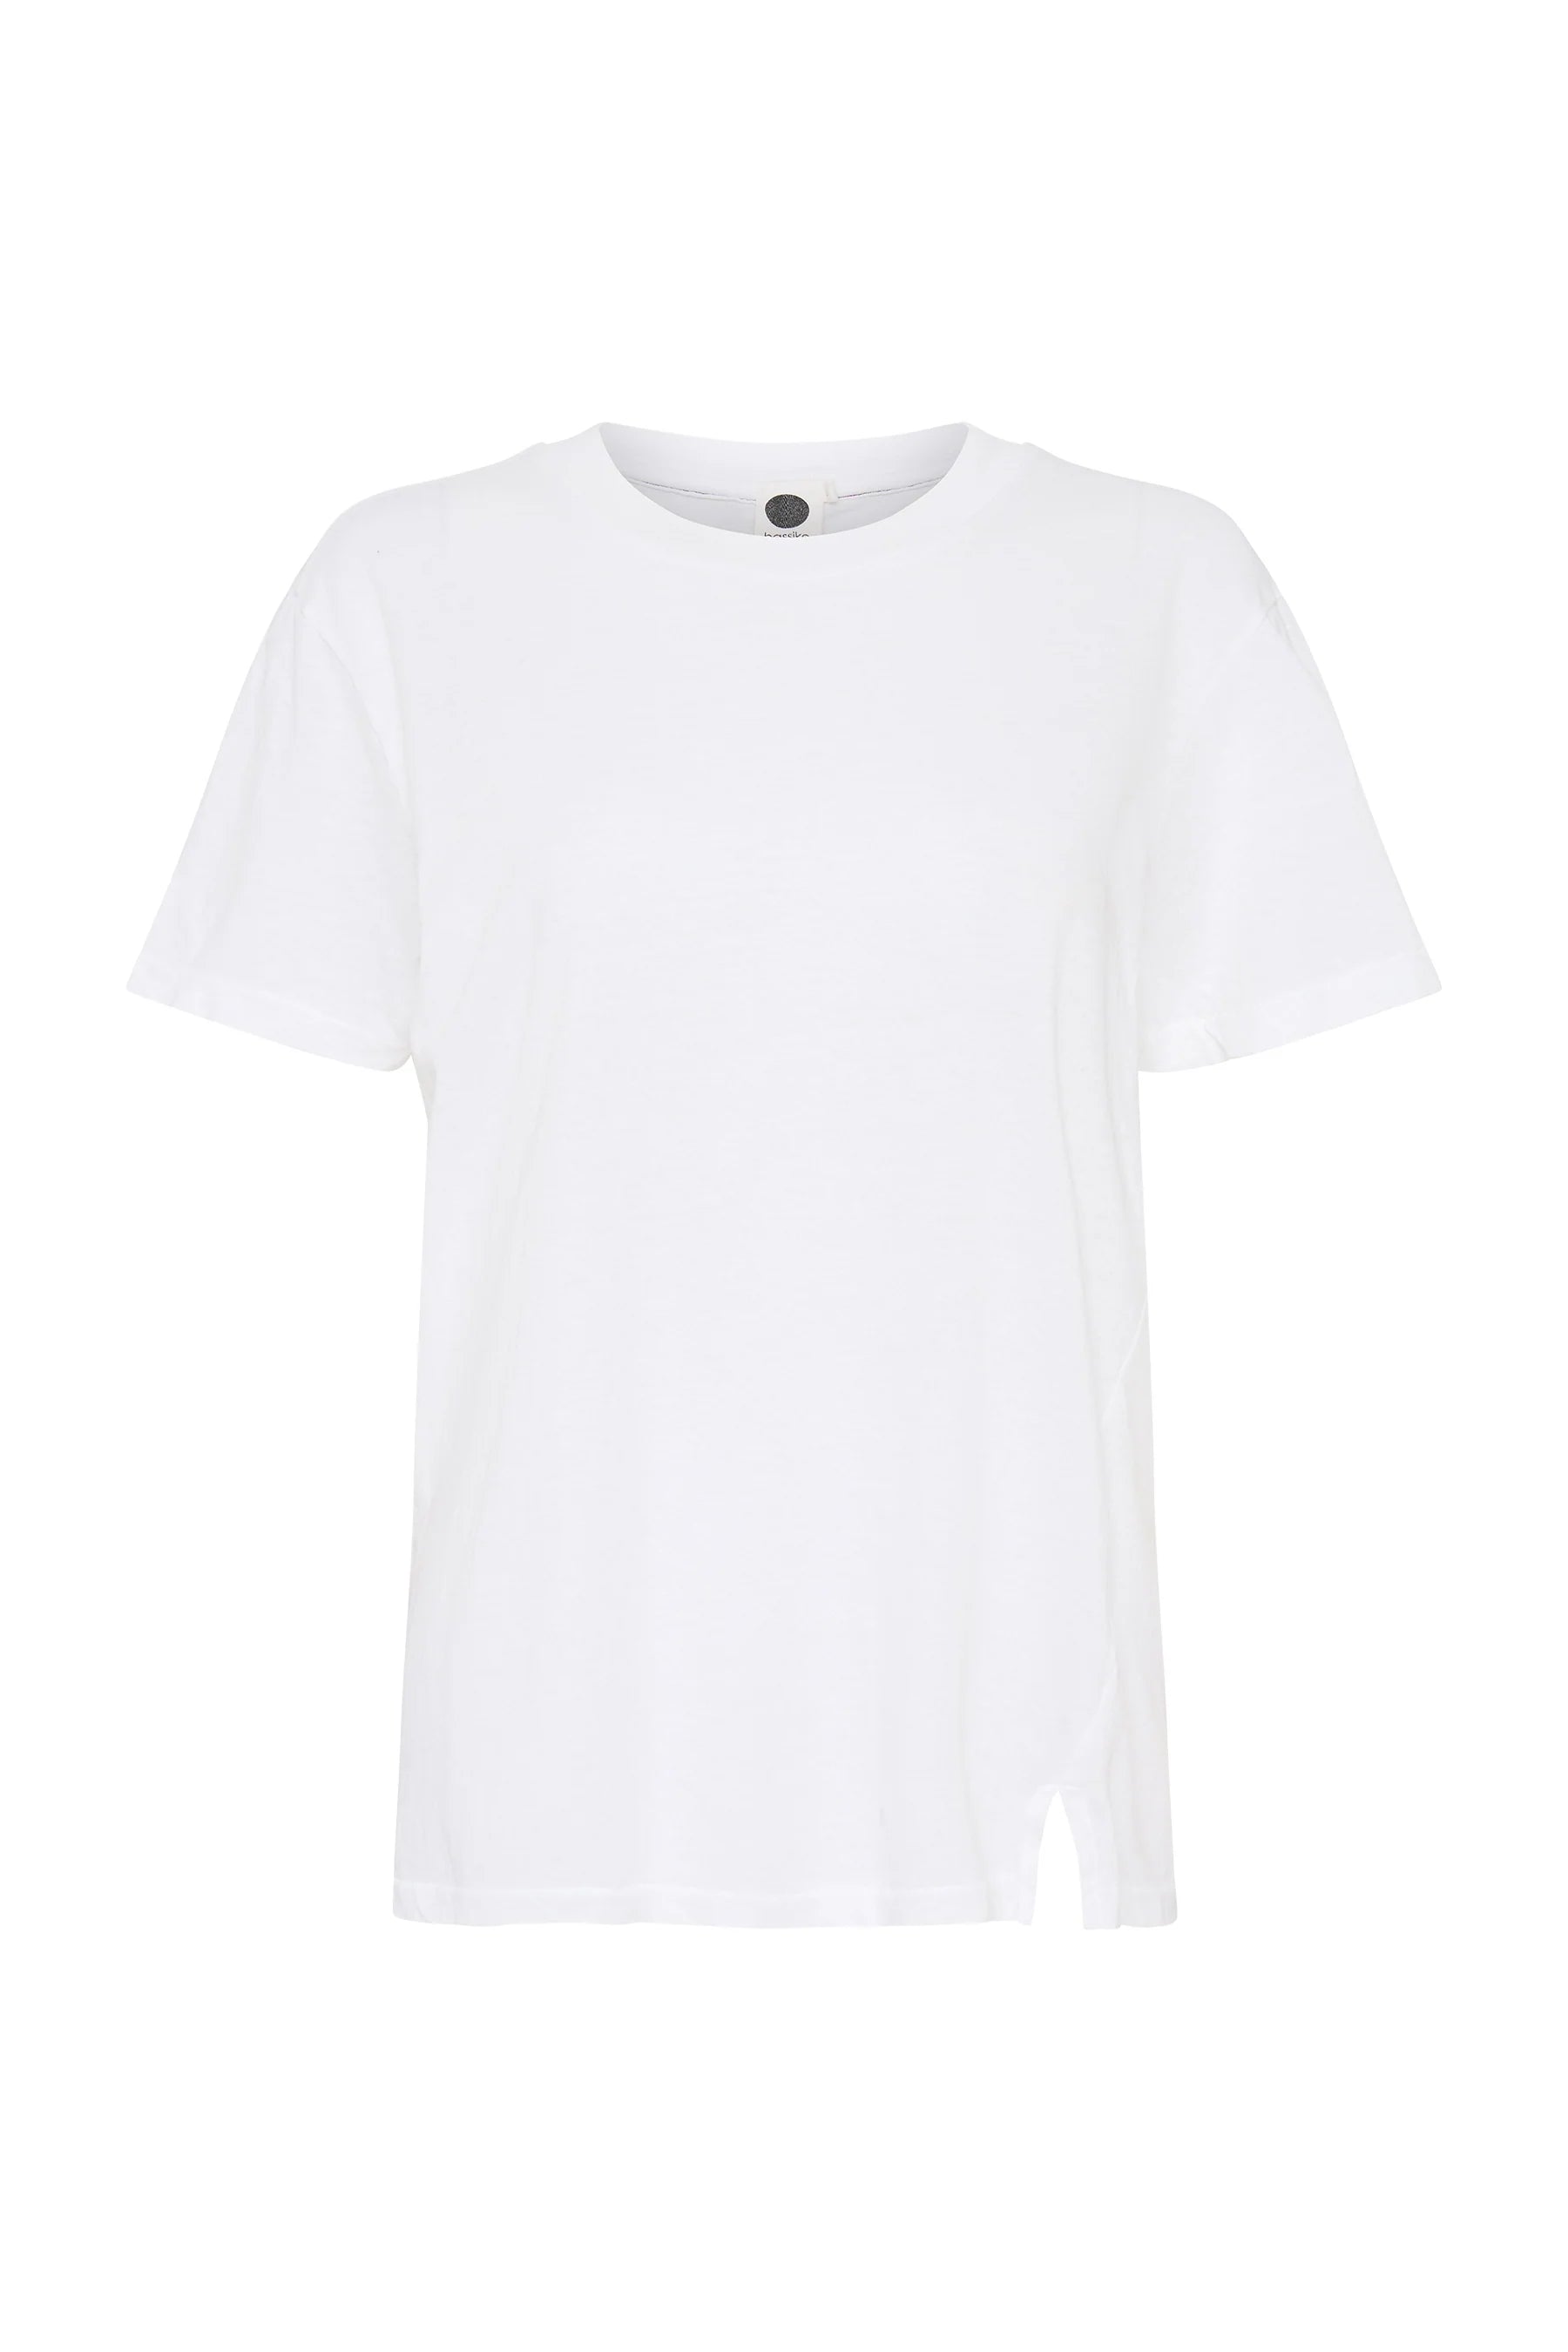 Bassike Regular Classic Short Sleeve T.Shirt - White